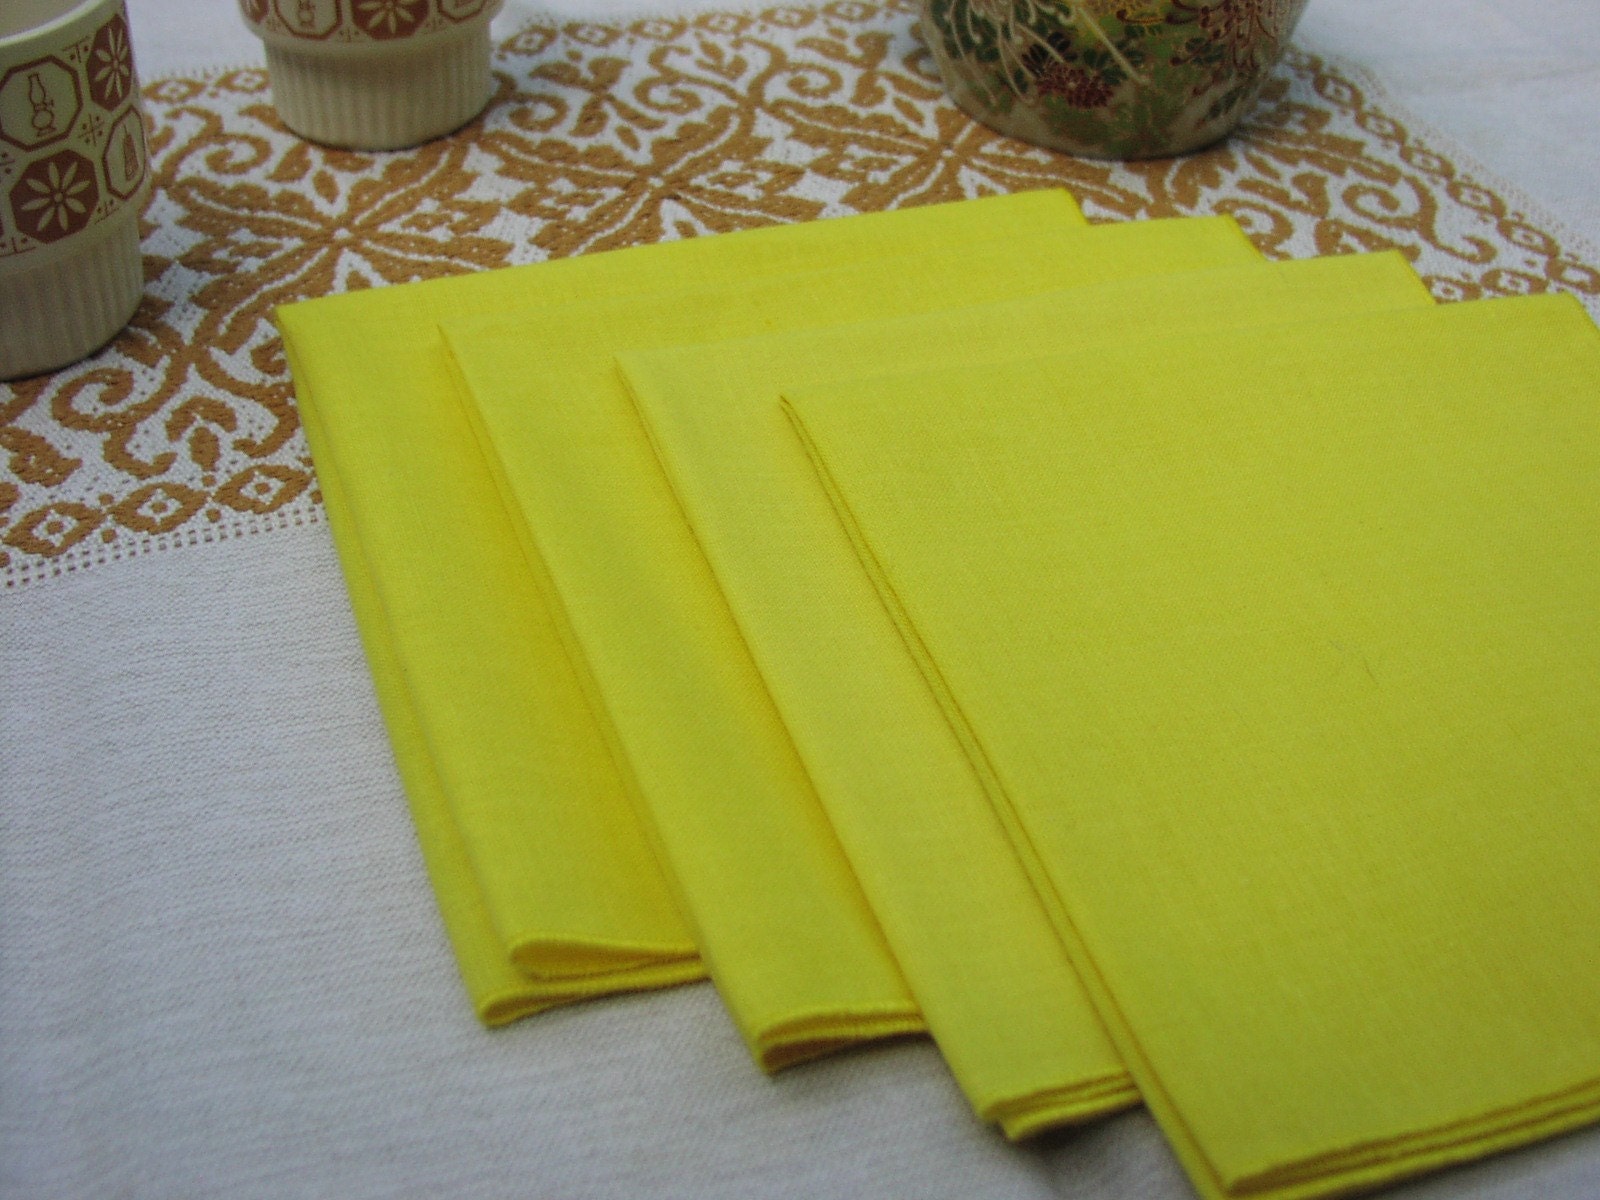 4 Vintage cloth napkins, eco friendly, neon lemon yellow, Florida citrus bit of sunshine